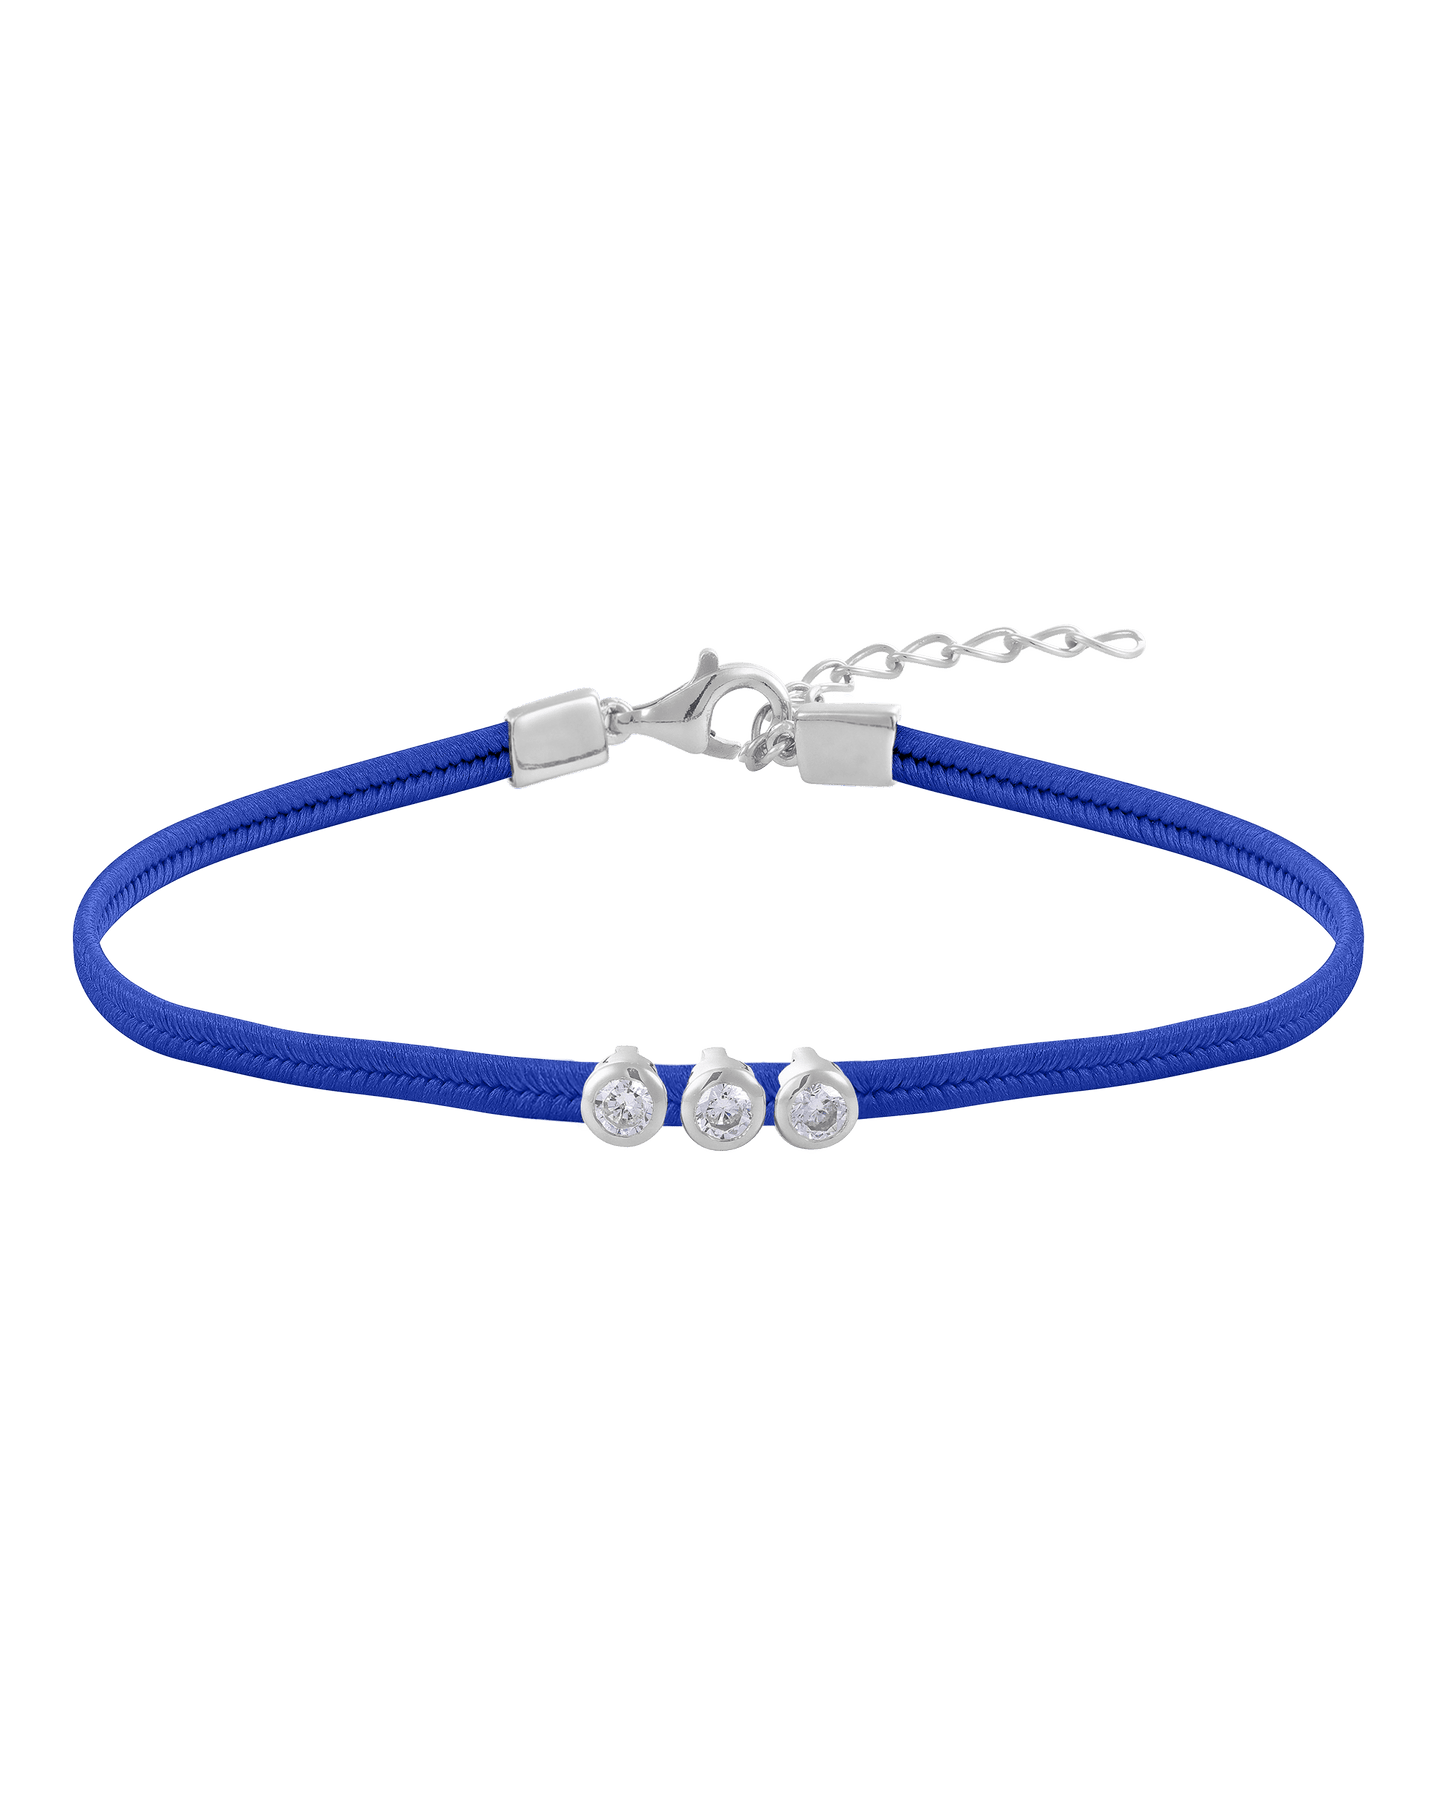 The Cord of Love - 925 Sterling Silver Bracelets magal-dev 1 Diamond Blue 